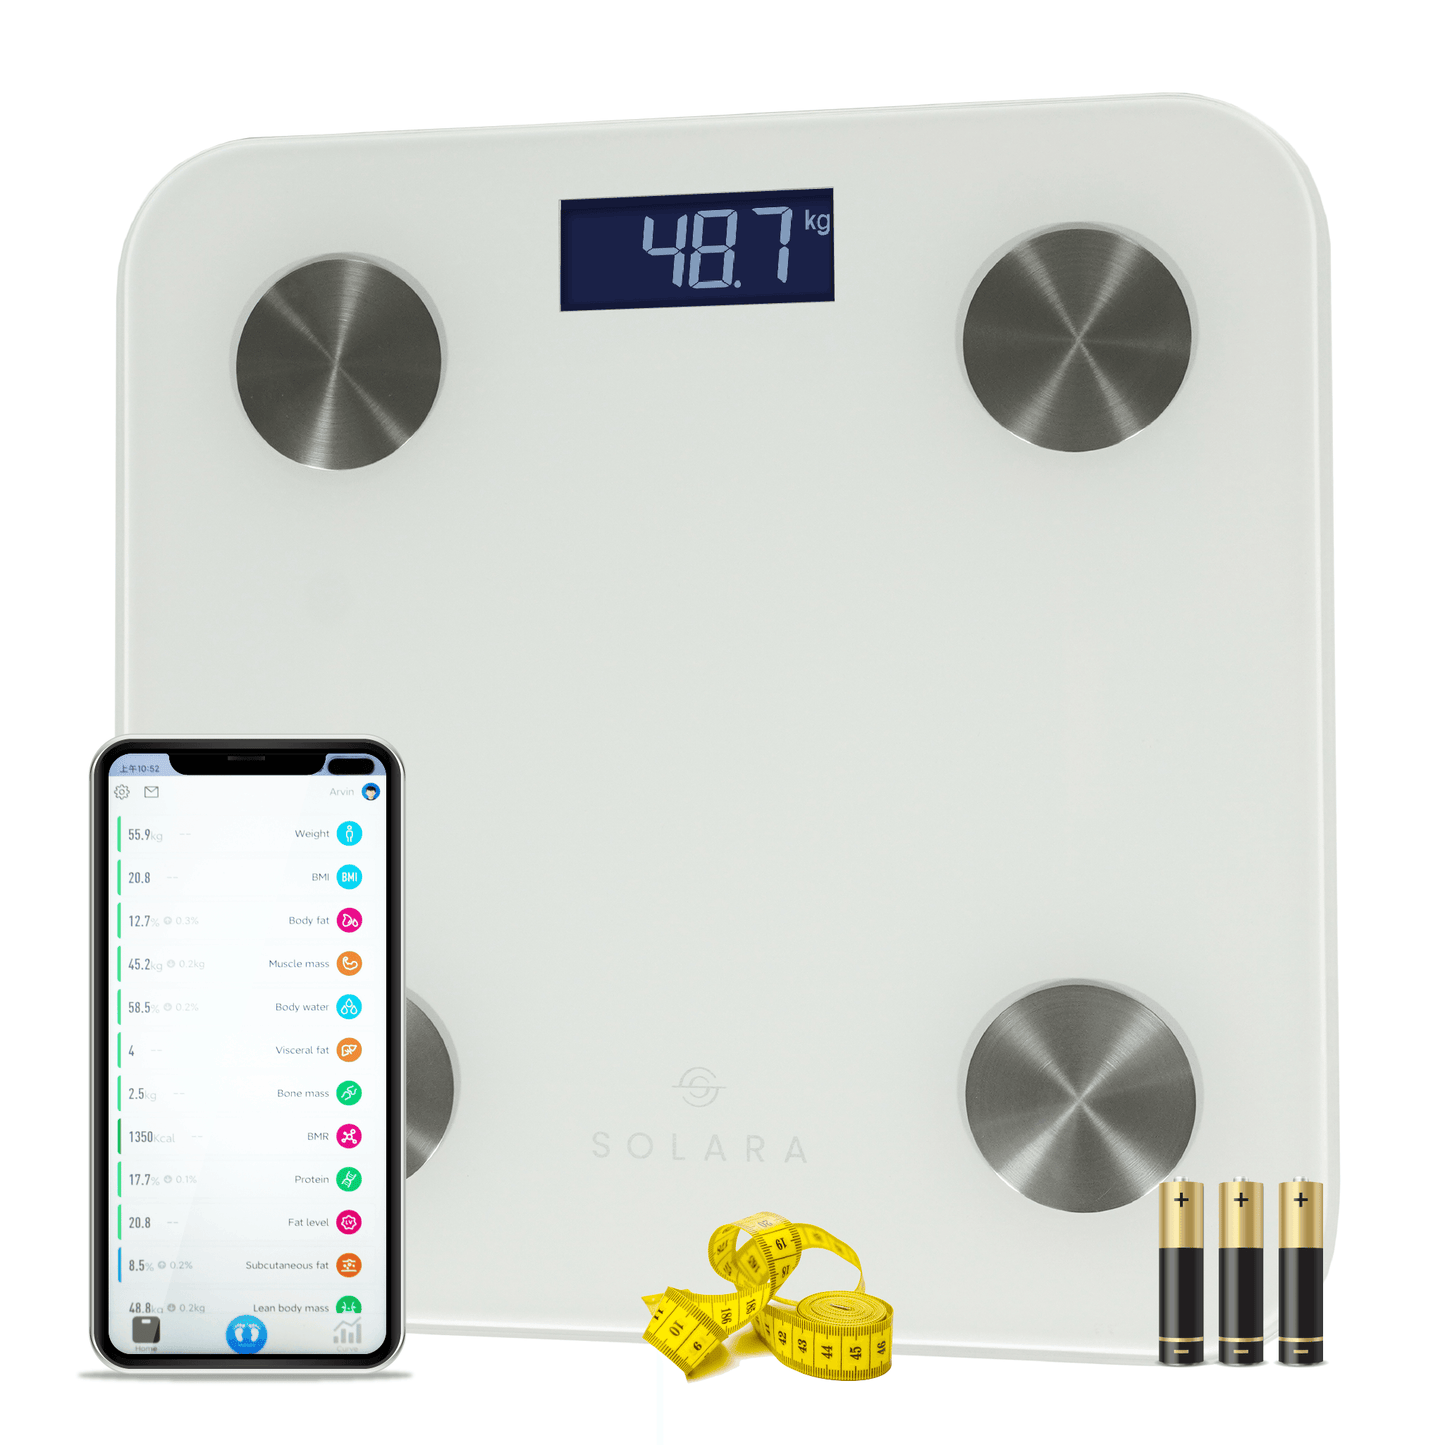 Solara Digital Weight Machine